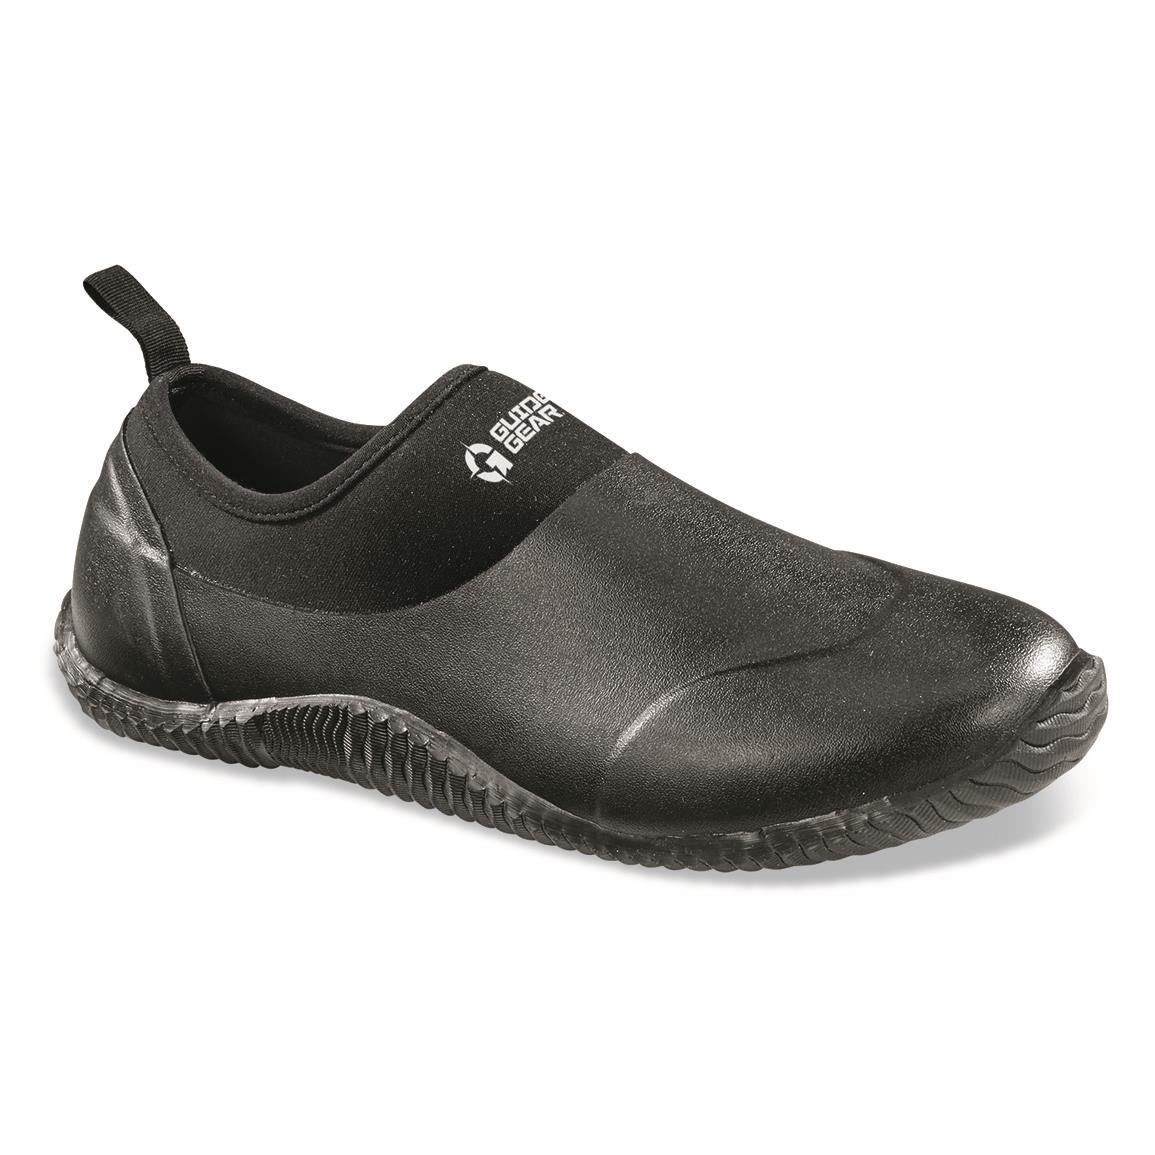 Guide Gear Men's Low Bogger Waterproof Rubber Shoes, Black